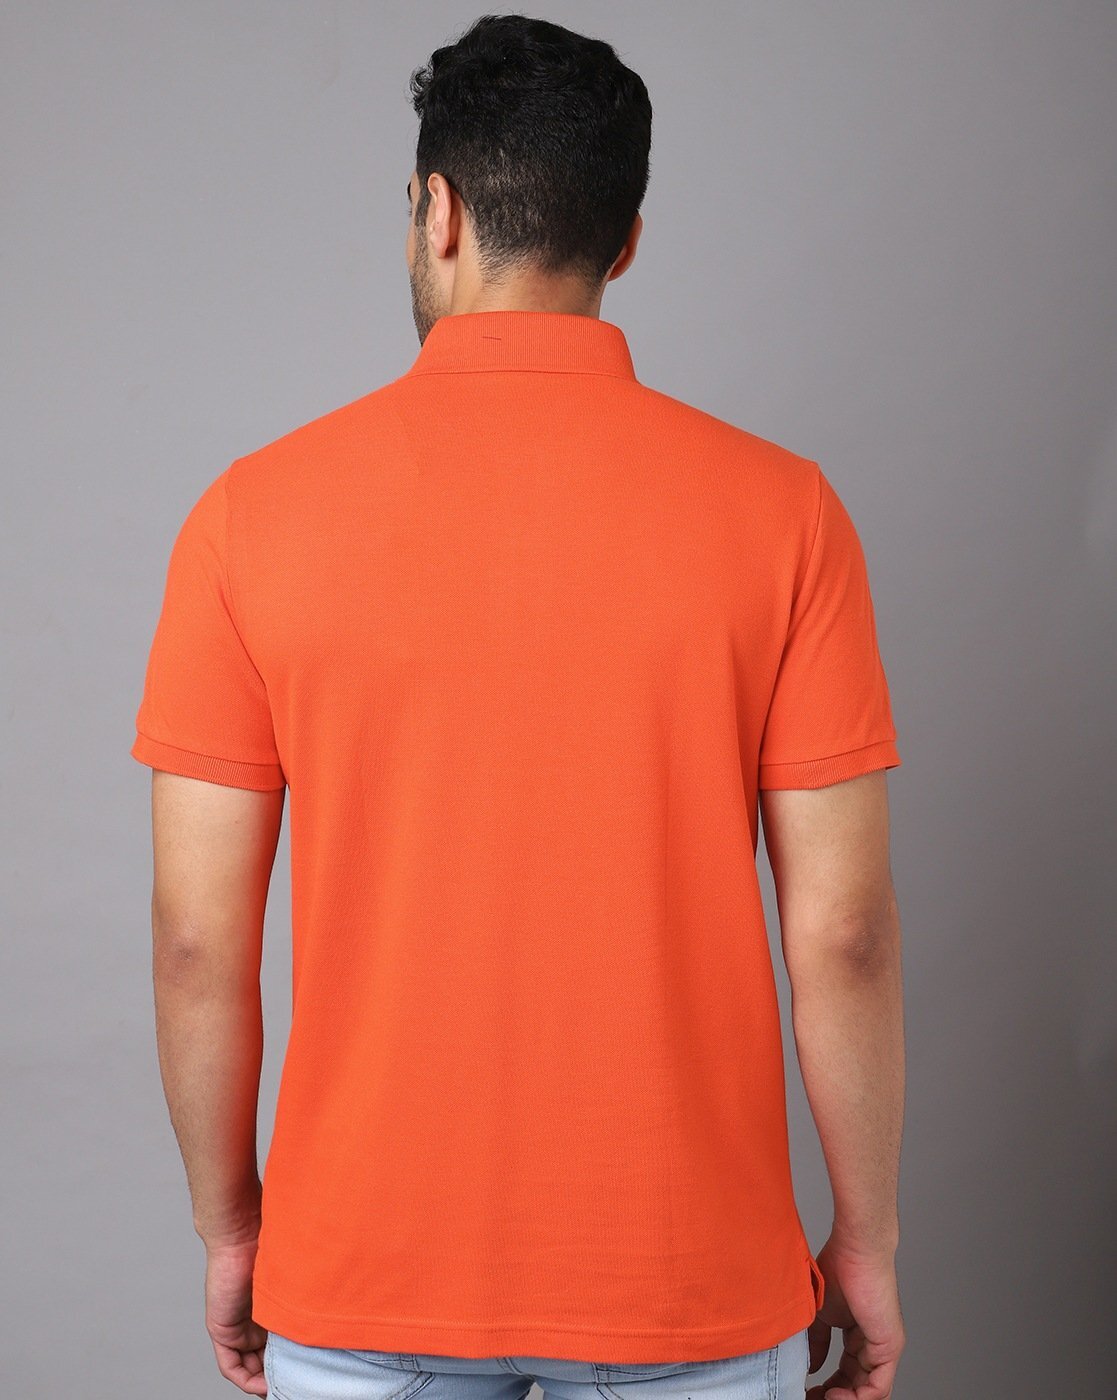 TOMMY HILFIGER - Men's basic T-shirt with flag - Orange - OT-XM0XM02306SGH